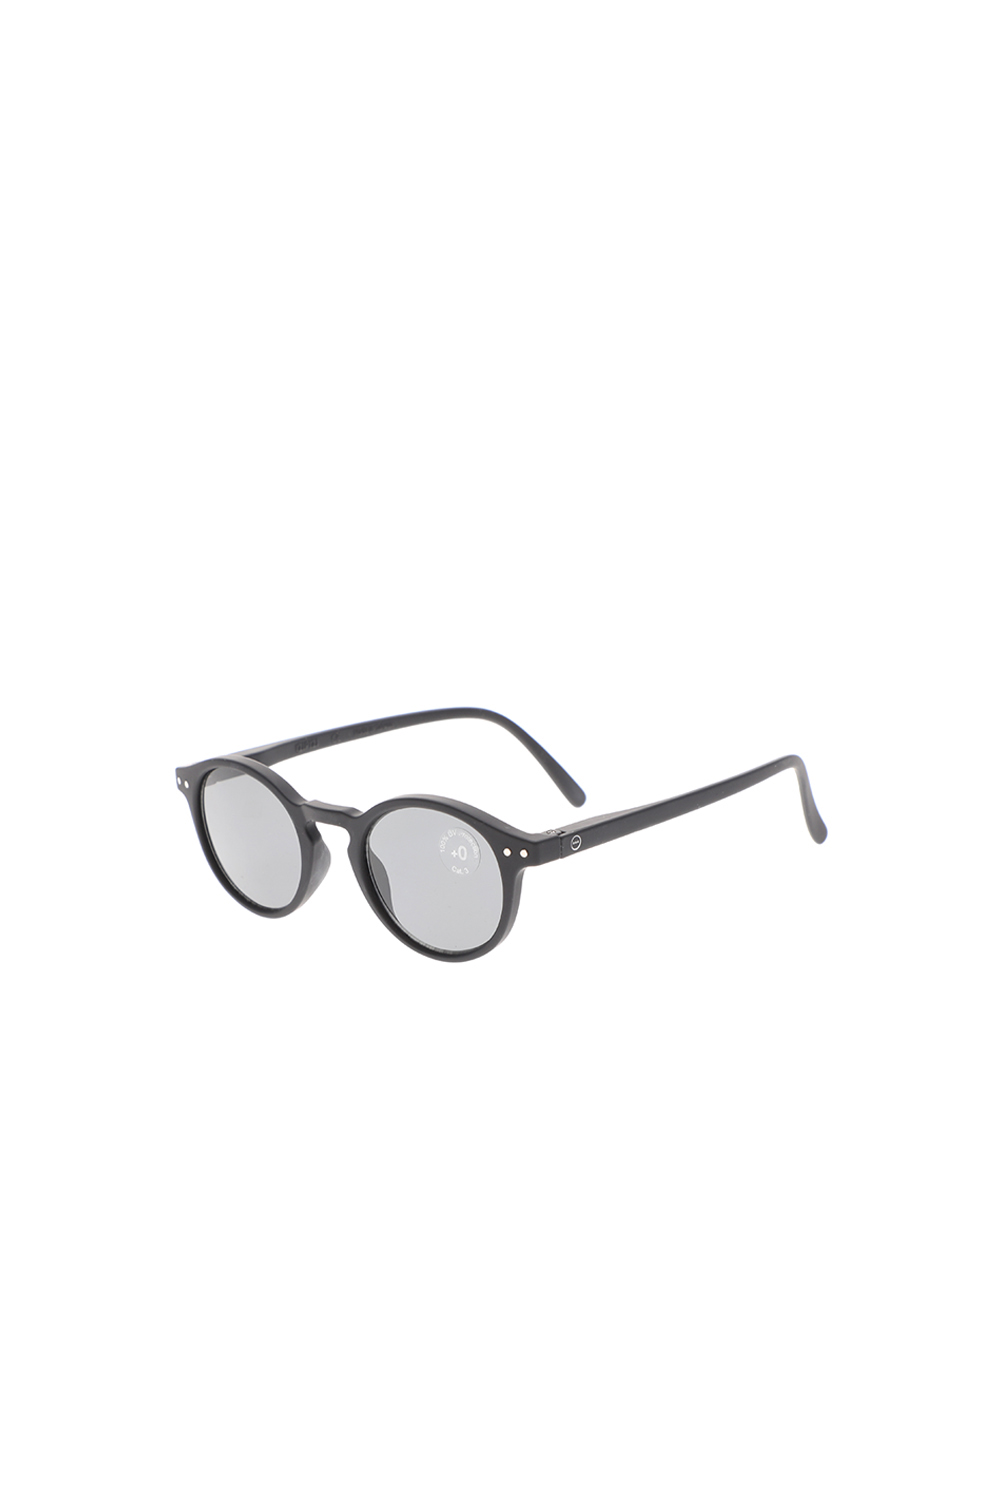 IZIPIZI – Unisex γυαλιά IZIPIZI 1 SHS COL μαύρο 1750323.0-0071